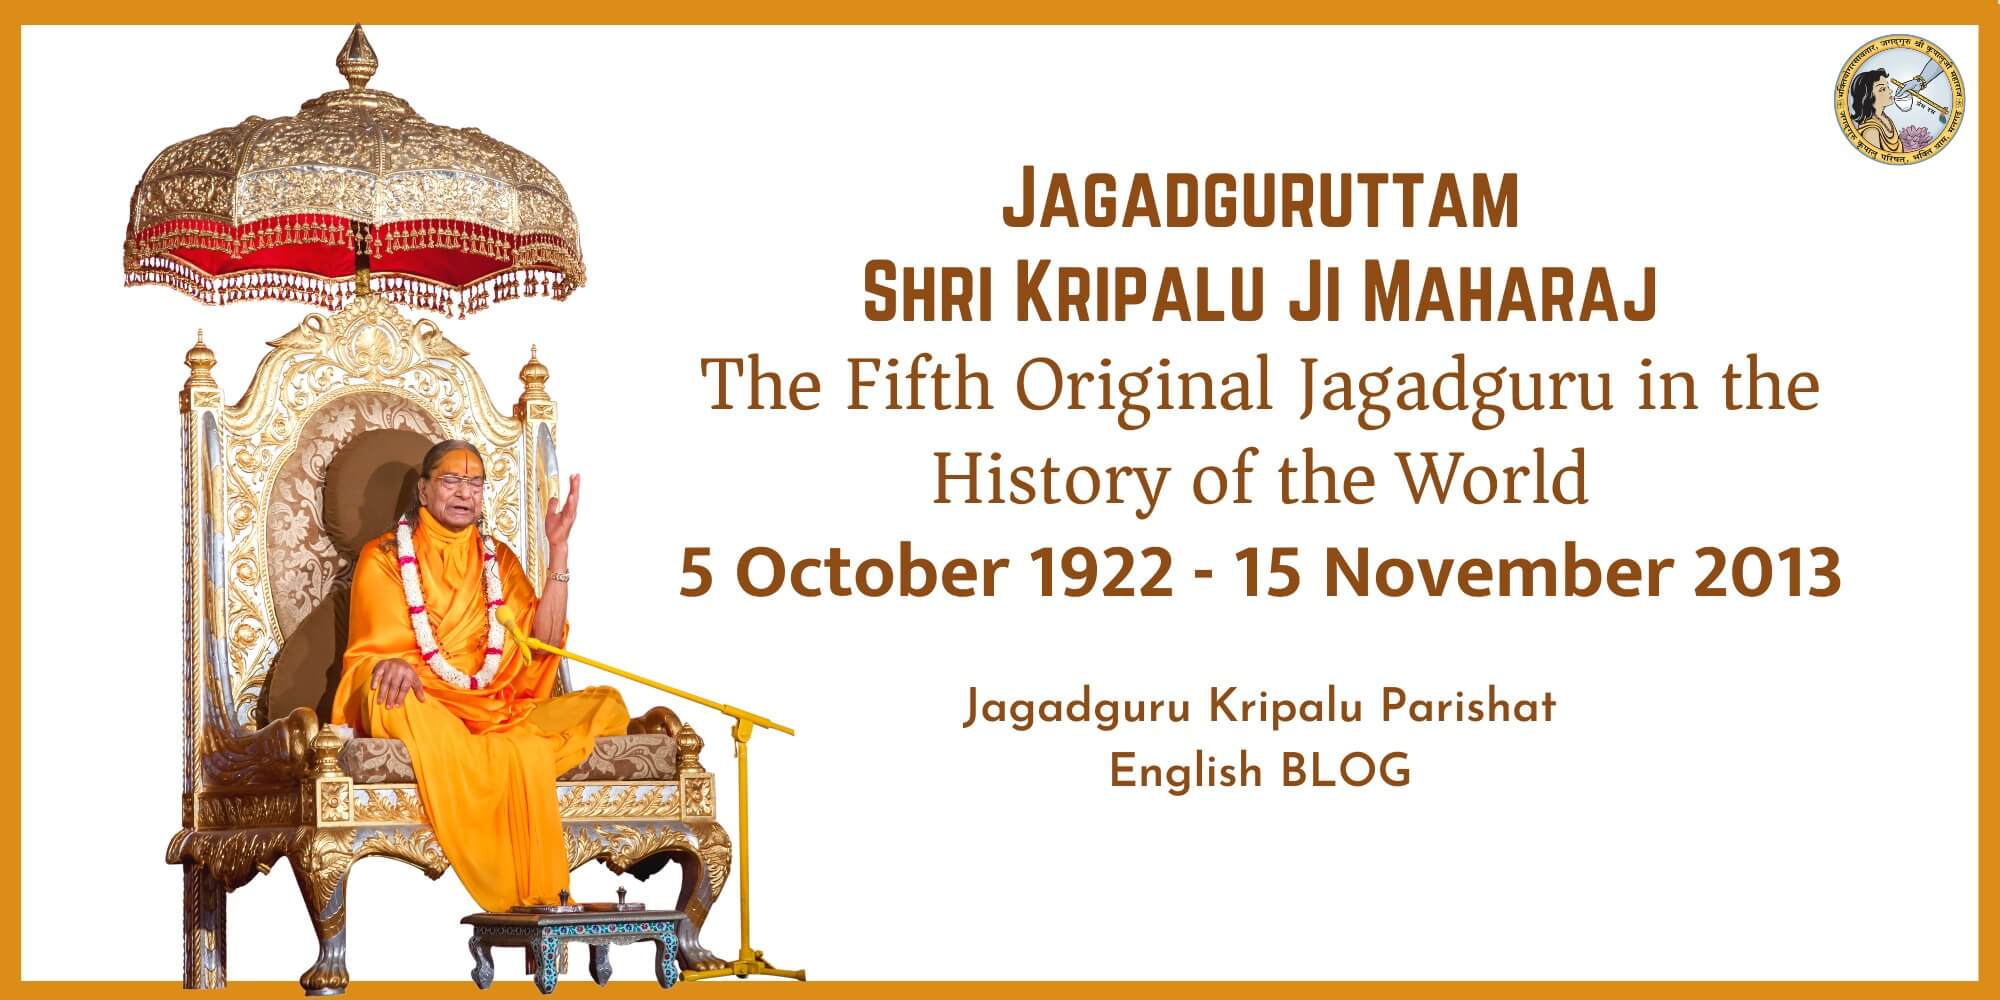 Jagadguruttam Shri Kripalu Ji Maharaj